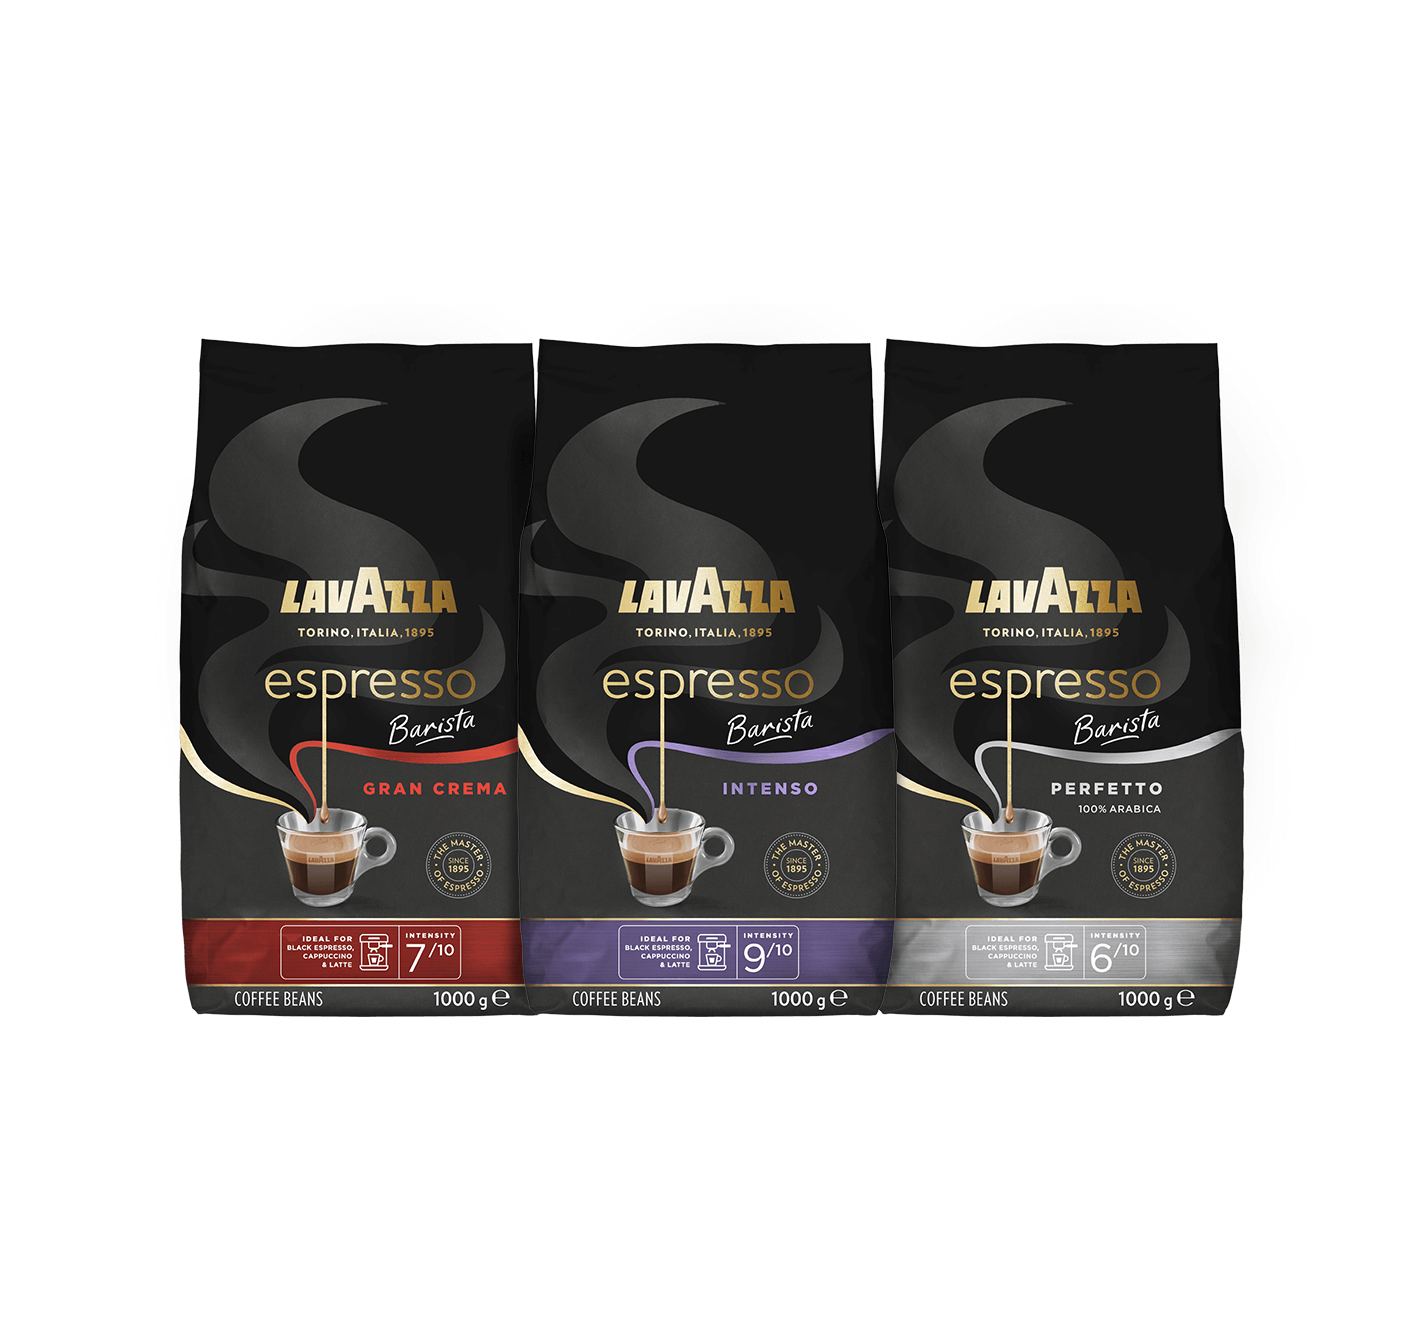 Espresso Barista Coffee Beans taster pack